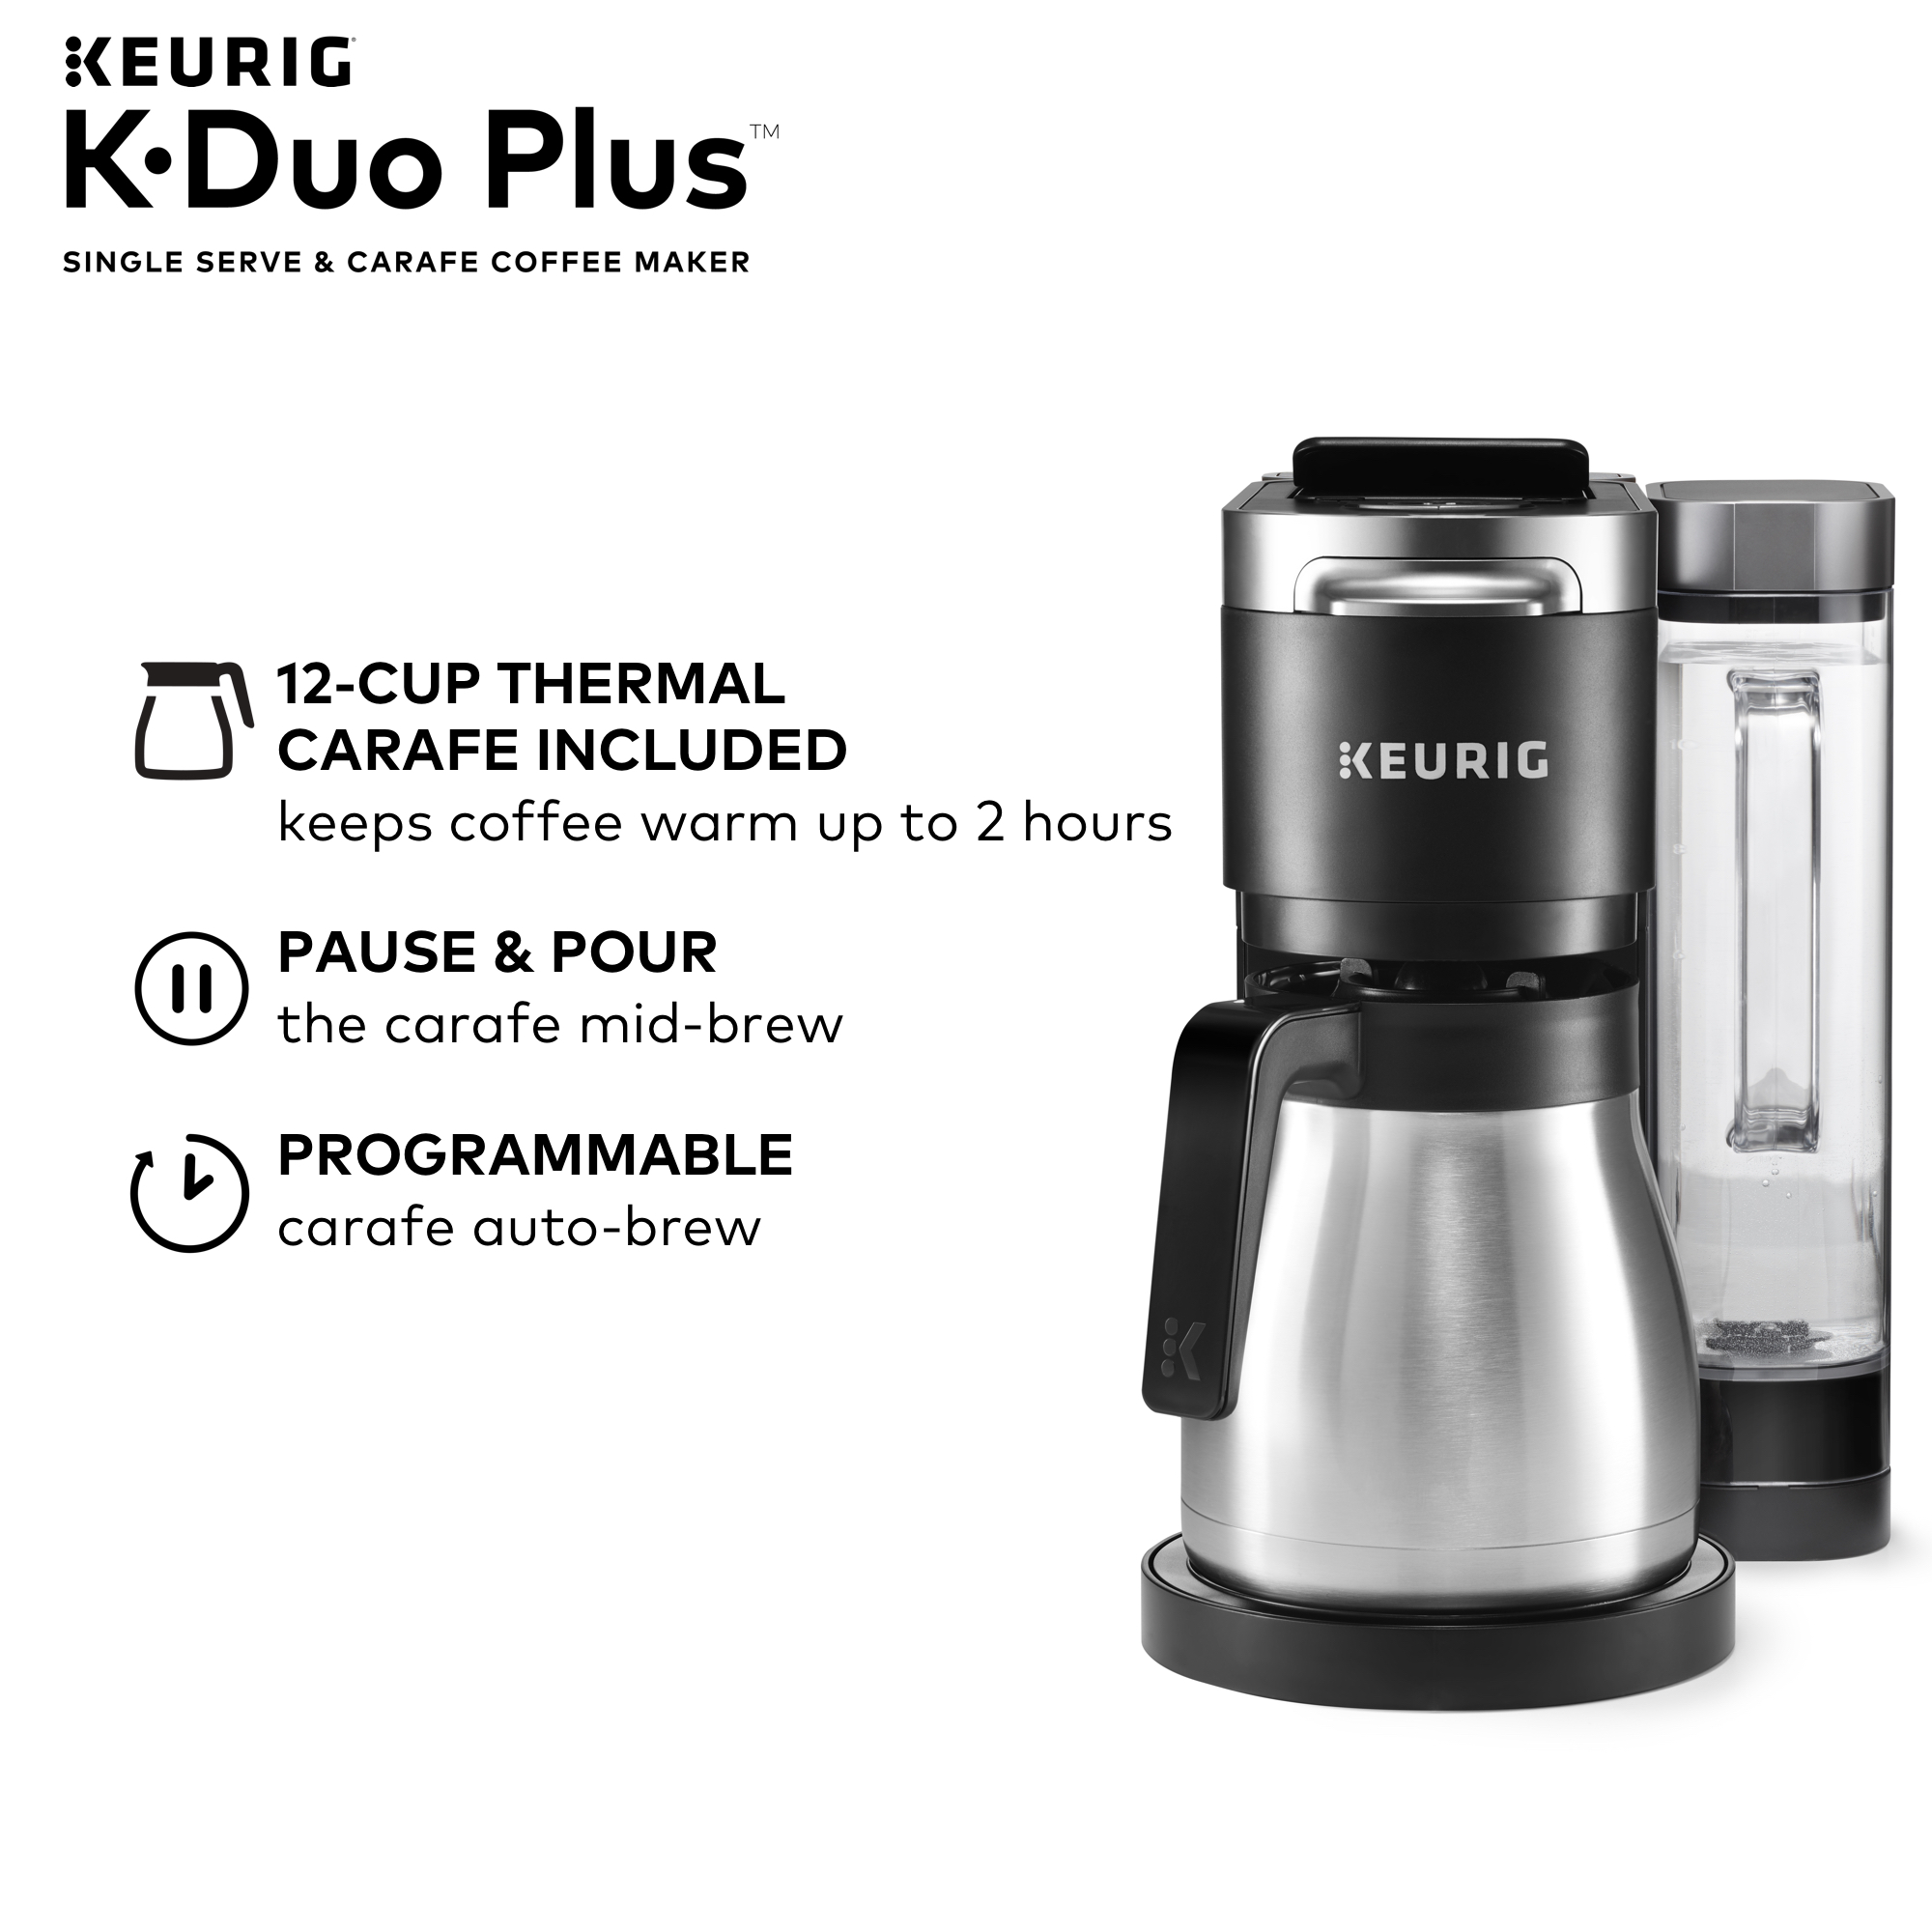 Keurig K-Duo Plus Single Serve & Carafe Coffee Maker - image 10 of 25